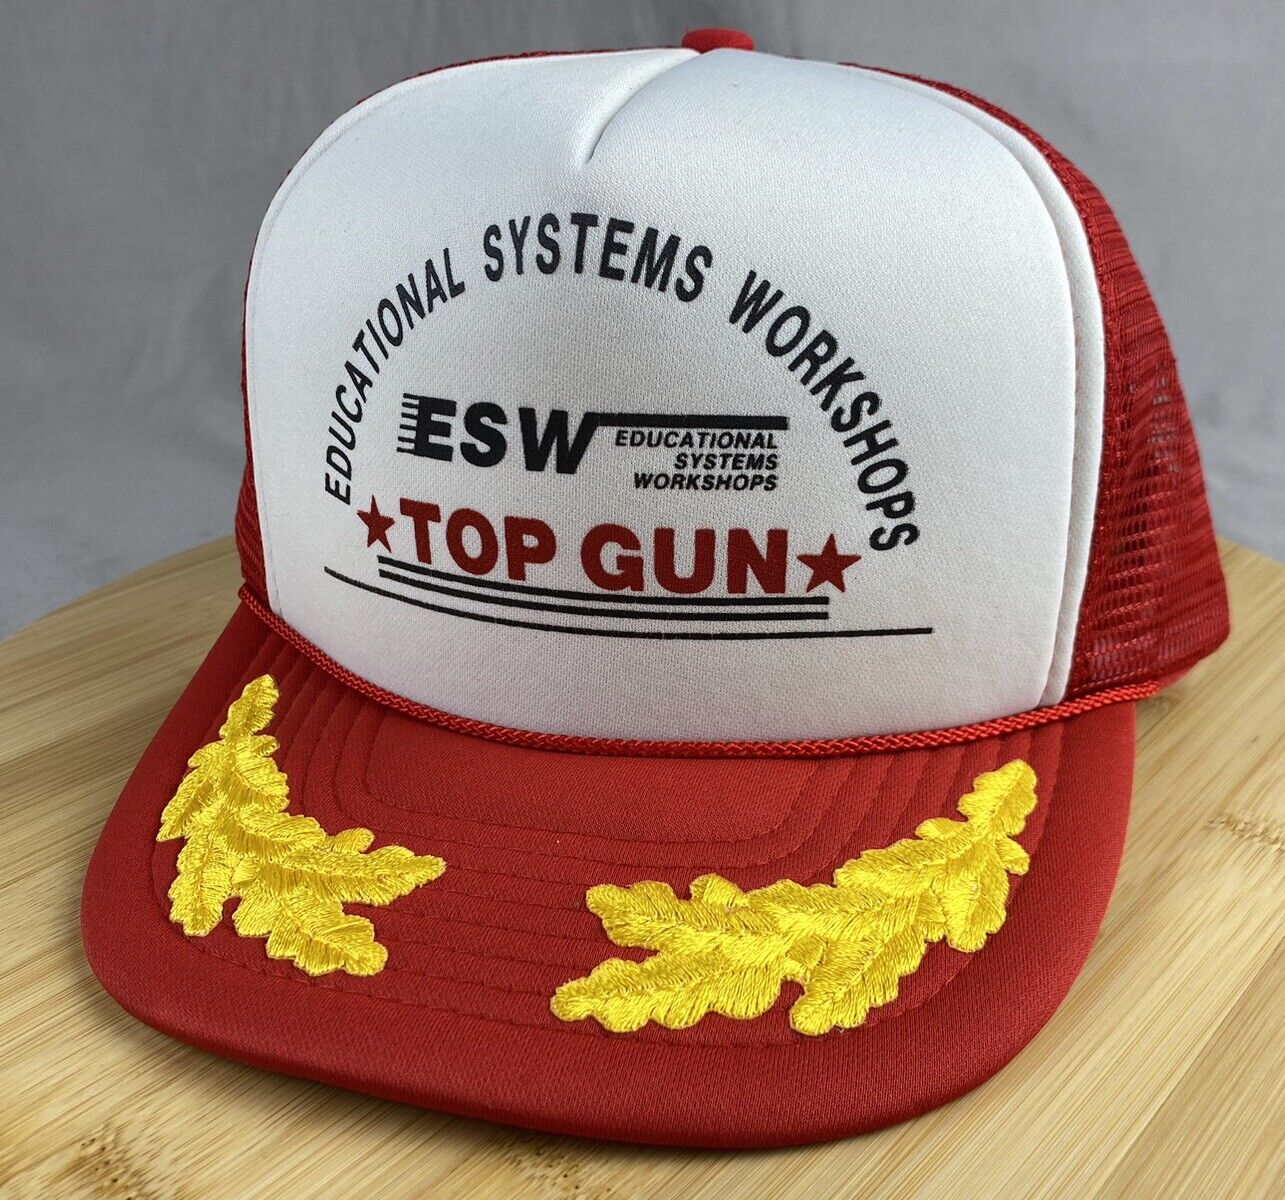 Vintage The Cinch Cap Top Gun Hat Mesh Trucker Snapback Adjustable ESW Workshops